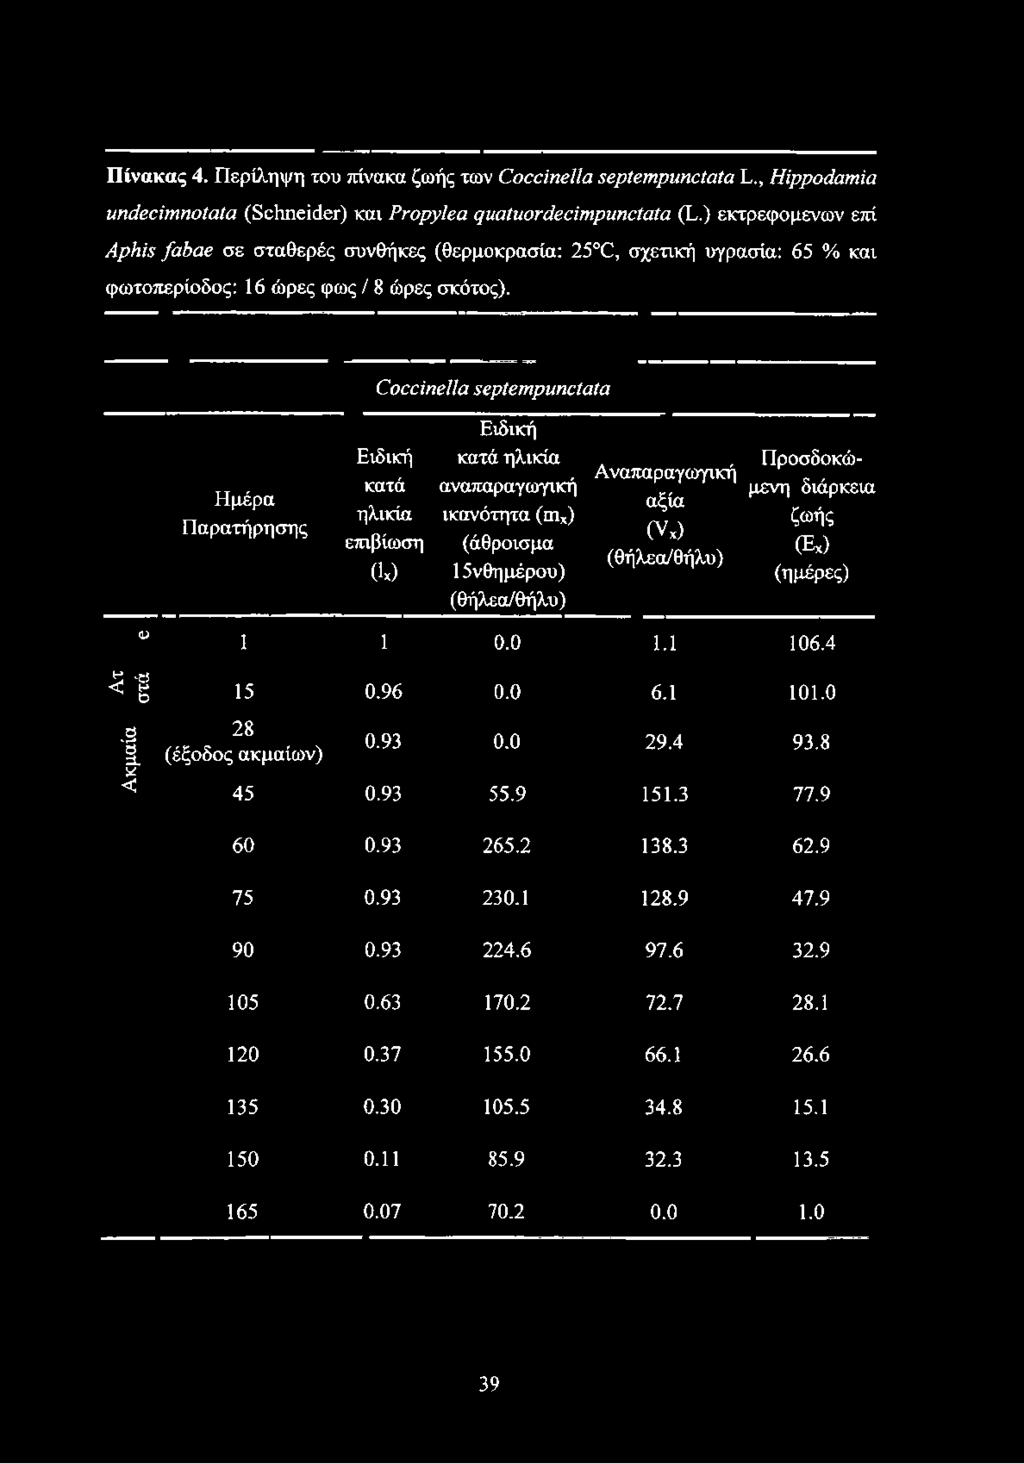 D Ημέρα Παρατήρησης Coccinella septempunctata Ειδική κατά ηλικία επιβίωση (1χ) Ειδική κατά ηλικία αναπαραγωγική ικανότητα (πιχ) (άθροισμα 15νθημέρου) (θήλεα/θήλυ) Αναπαραγωγική αξία ( V x )